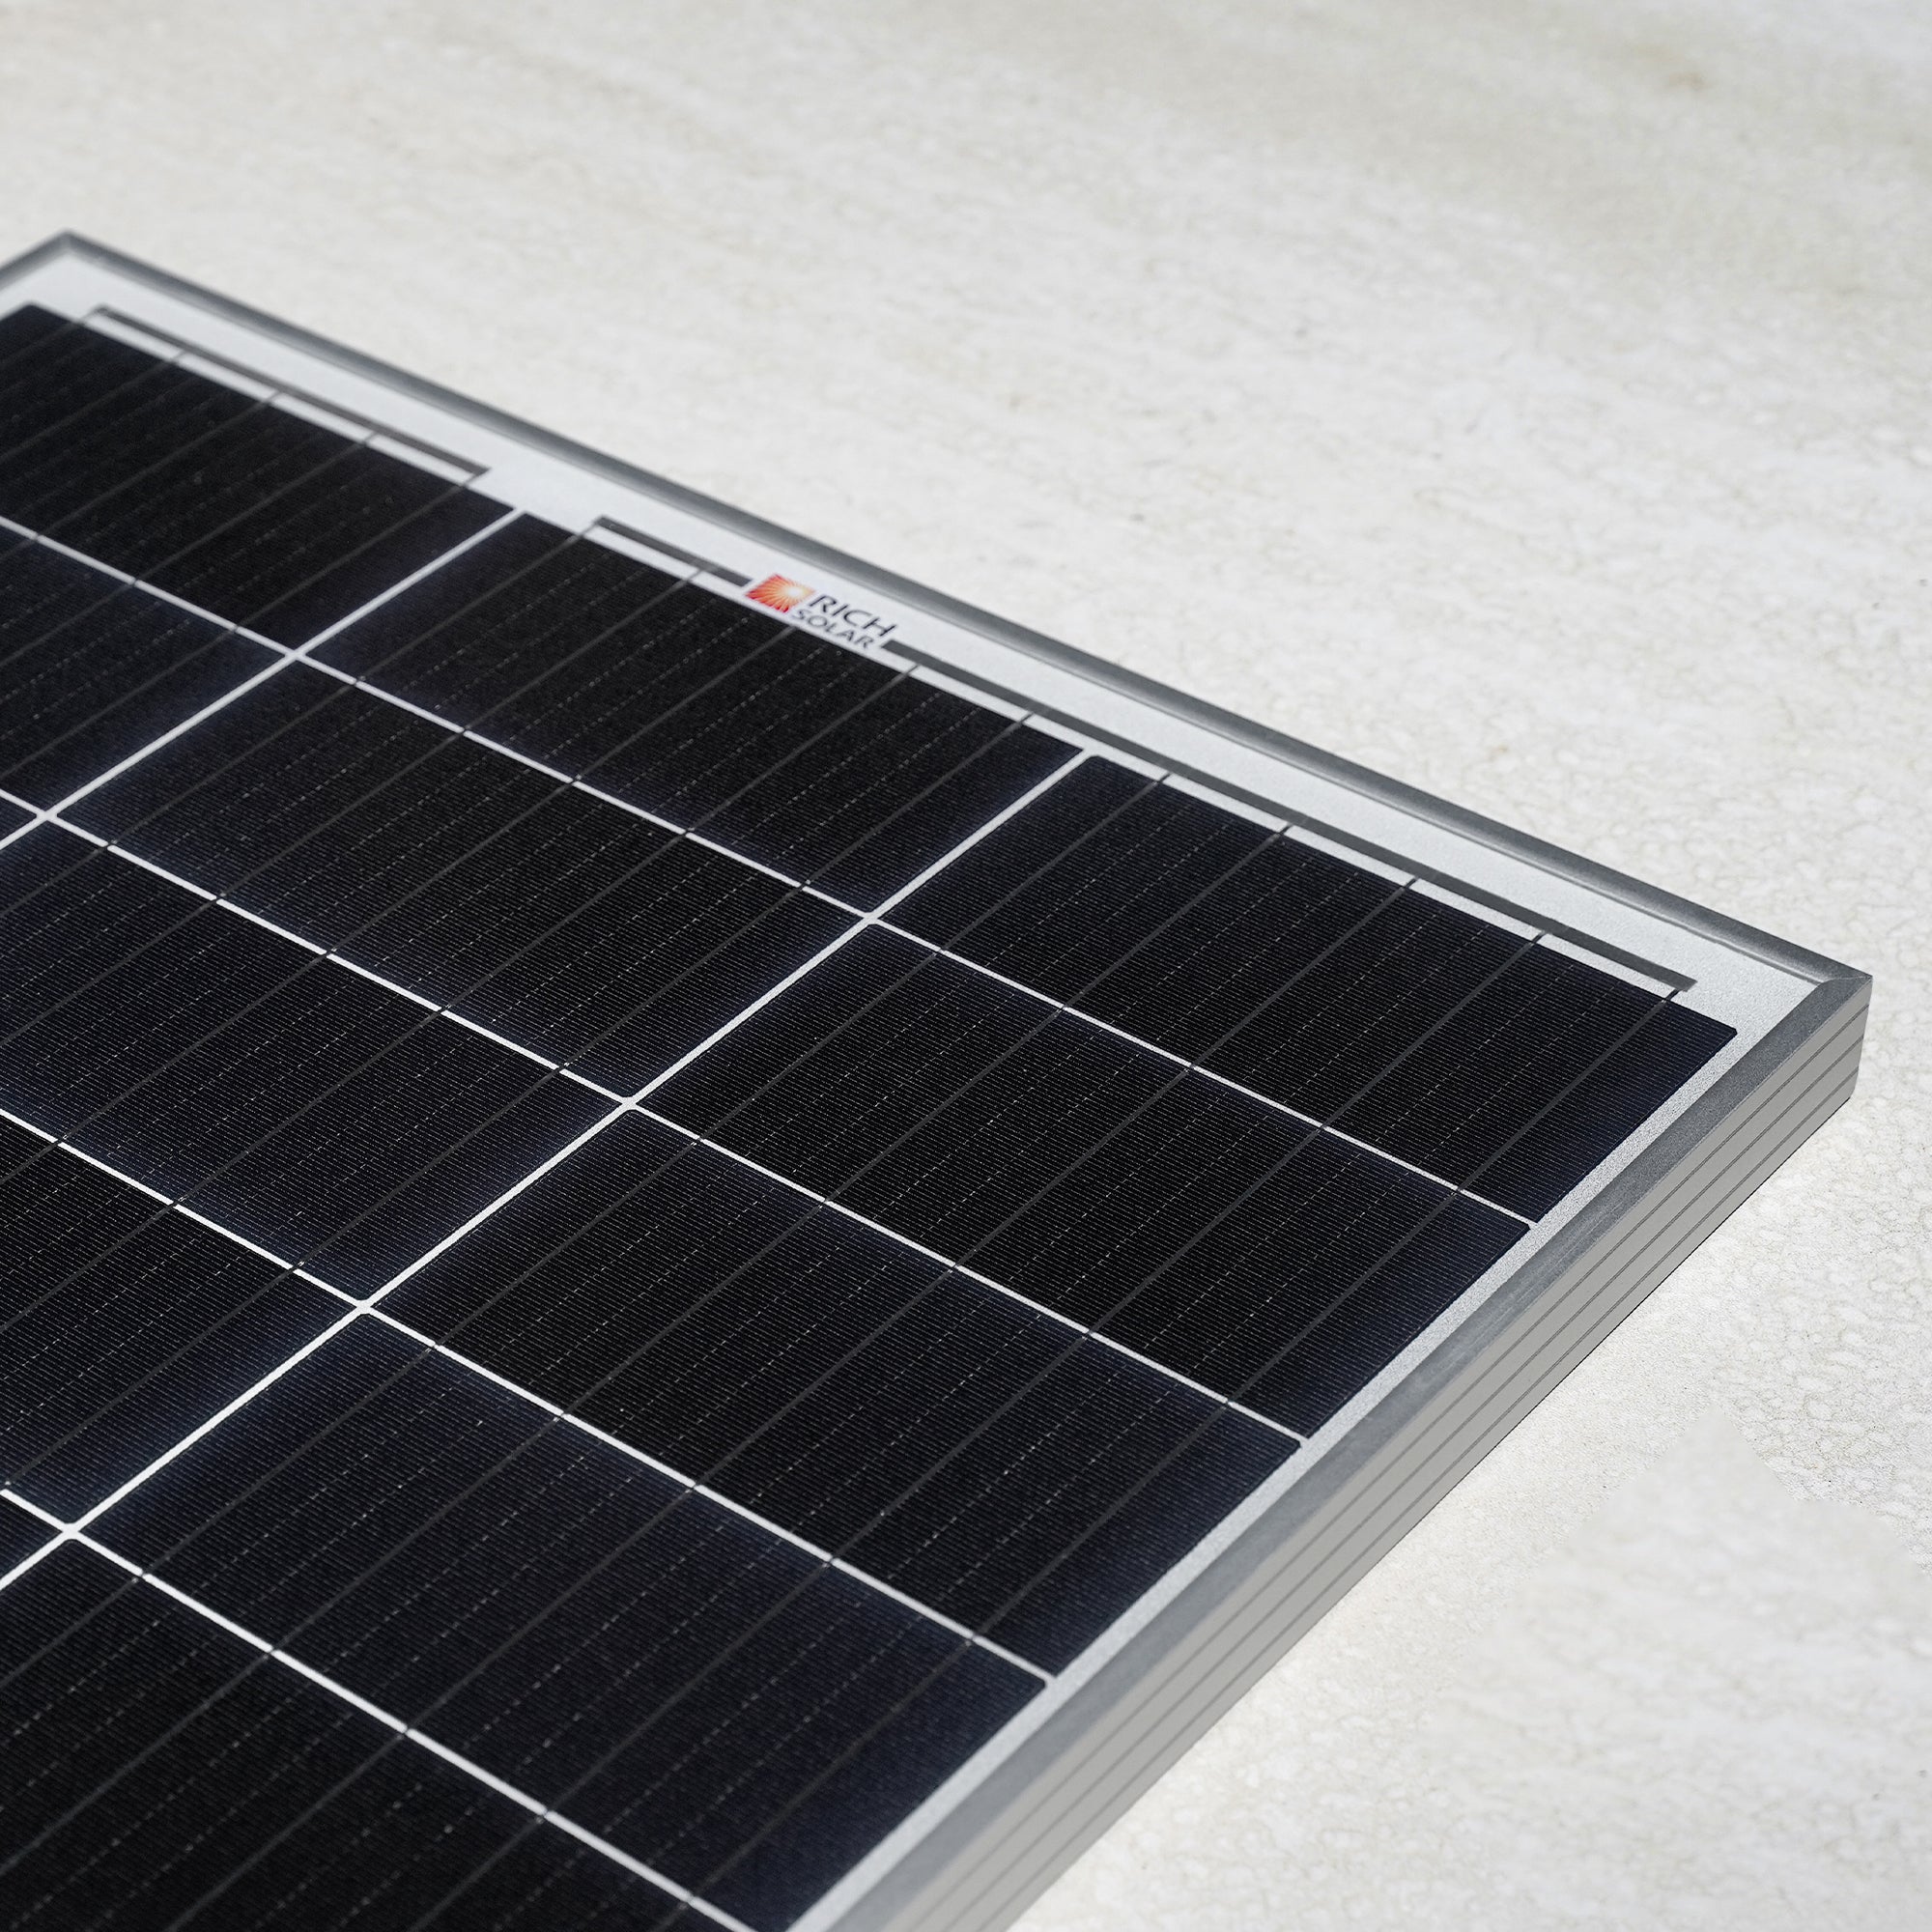 RICH SOLAR MEGA 100 Watt Monocrystalline Solar Panel | Best 12V Panel for VAN RVs and Off-Grid - Solar Generators and Power Stations Plus